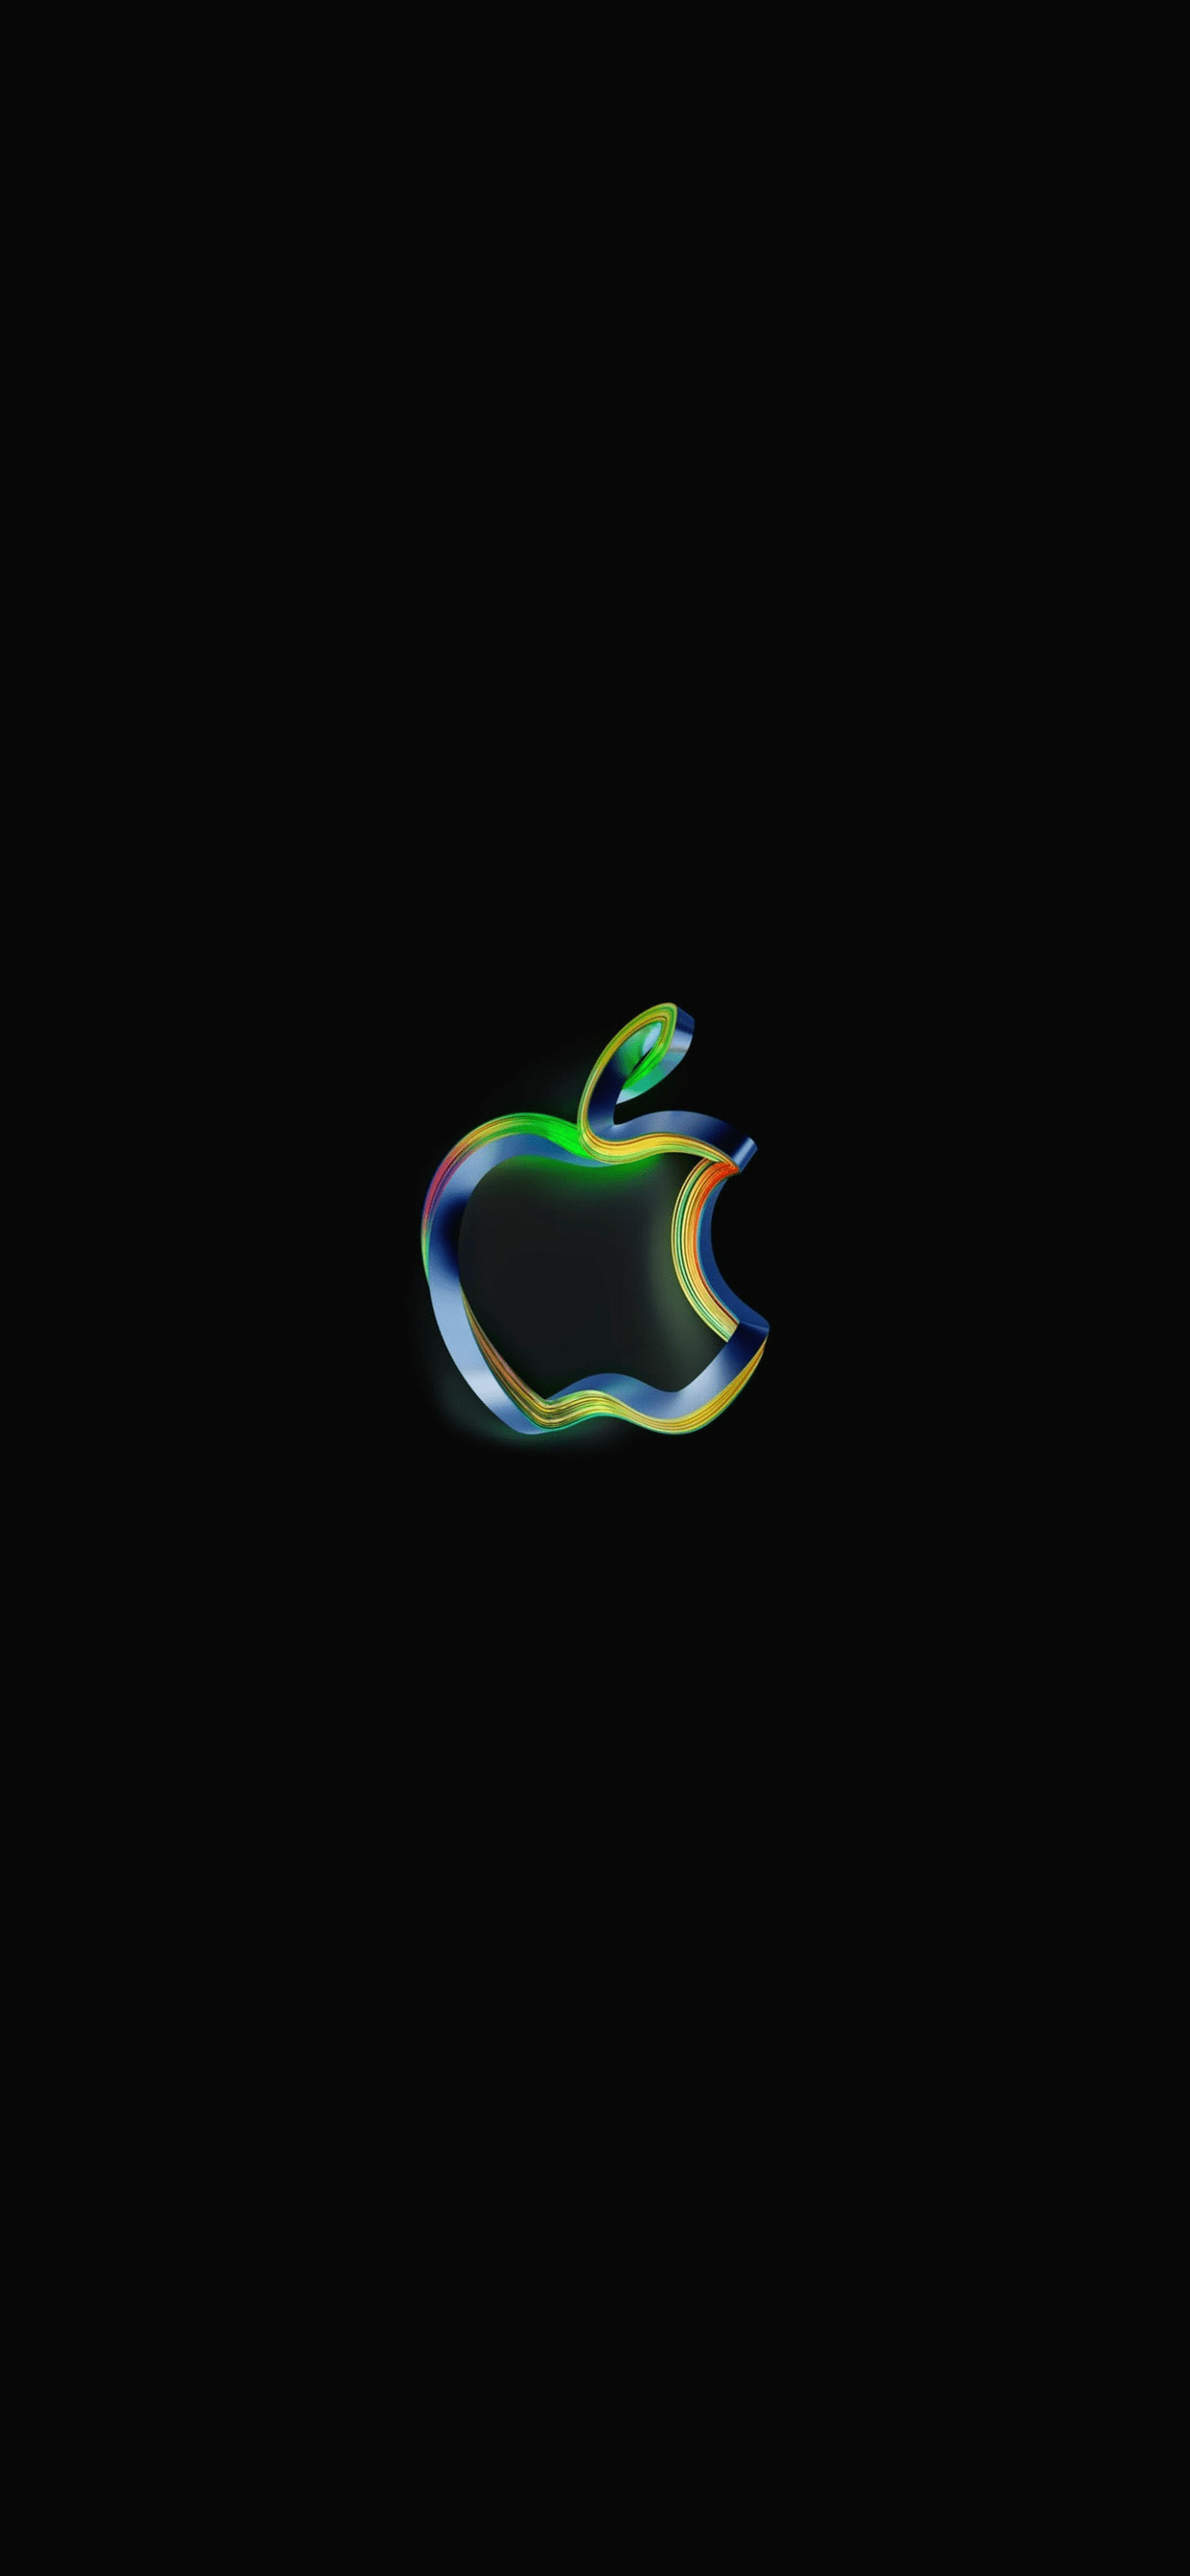 Cool Apple Logo IphoneWallpapers